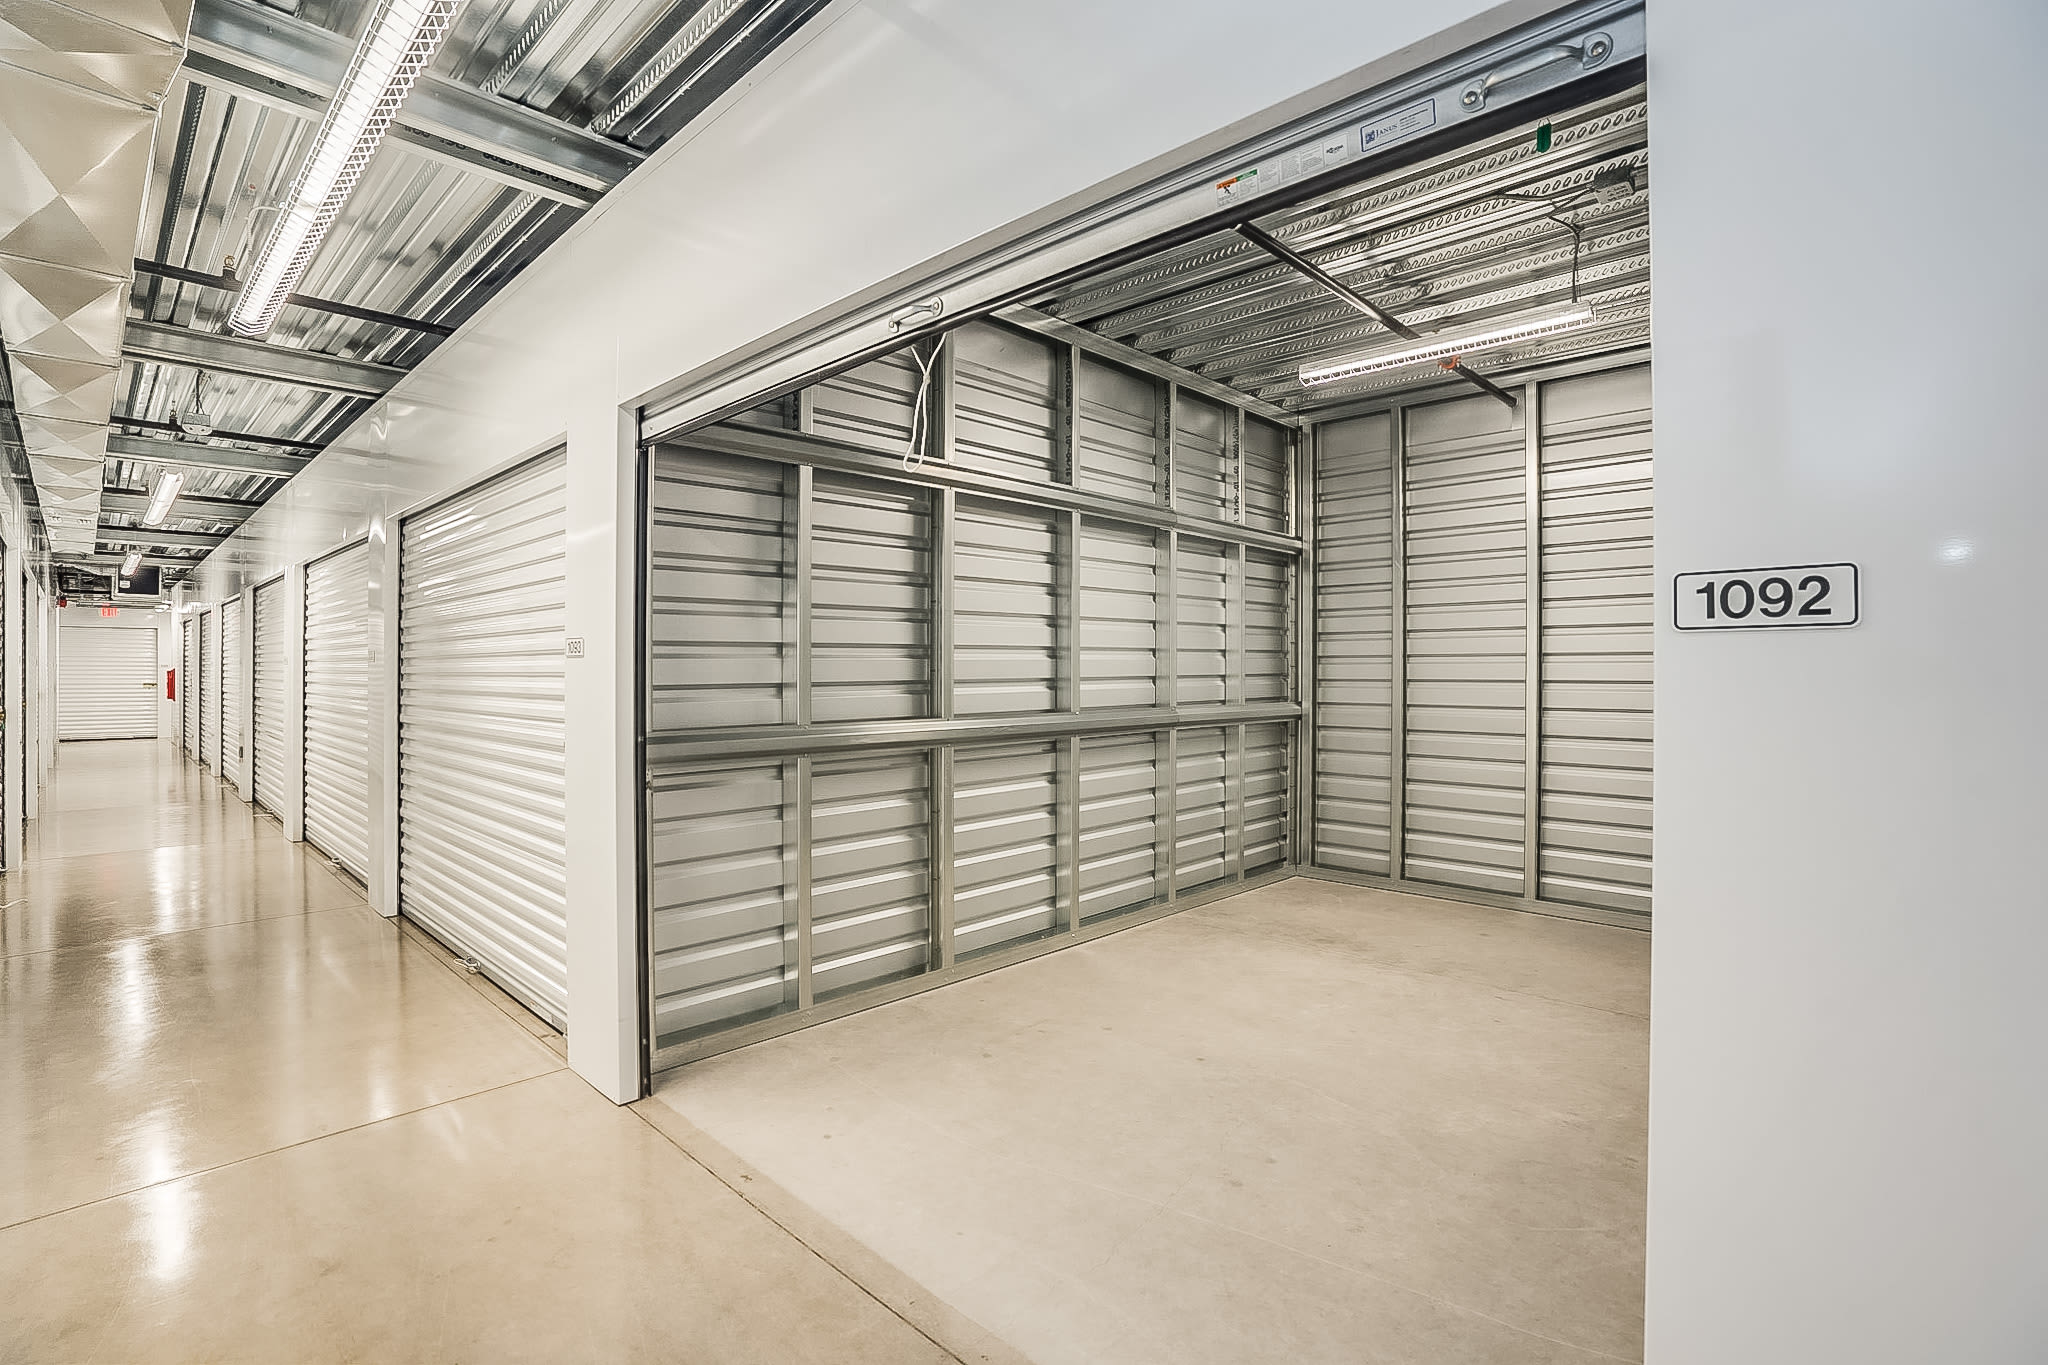 Indoor storage units at Rancho Sahuarita Self Storage and RV in Sahuarita, Arizona. 